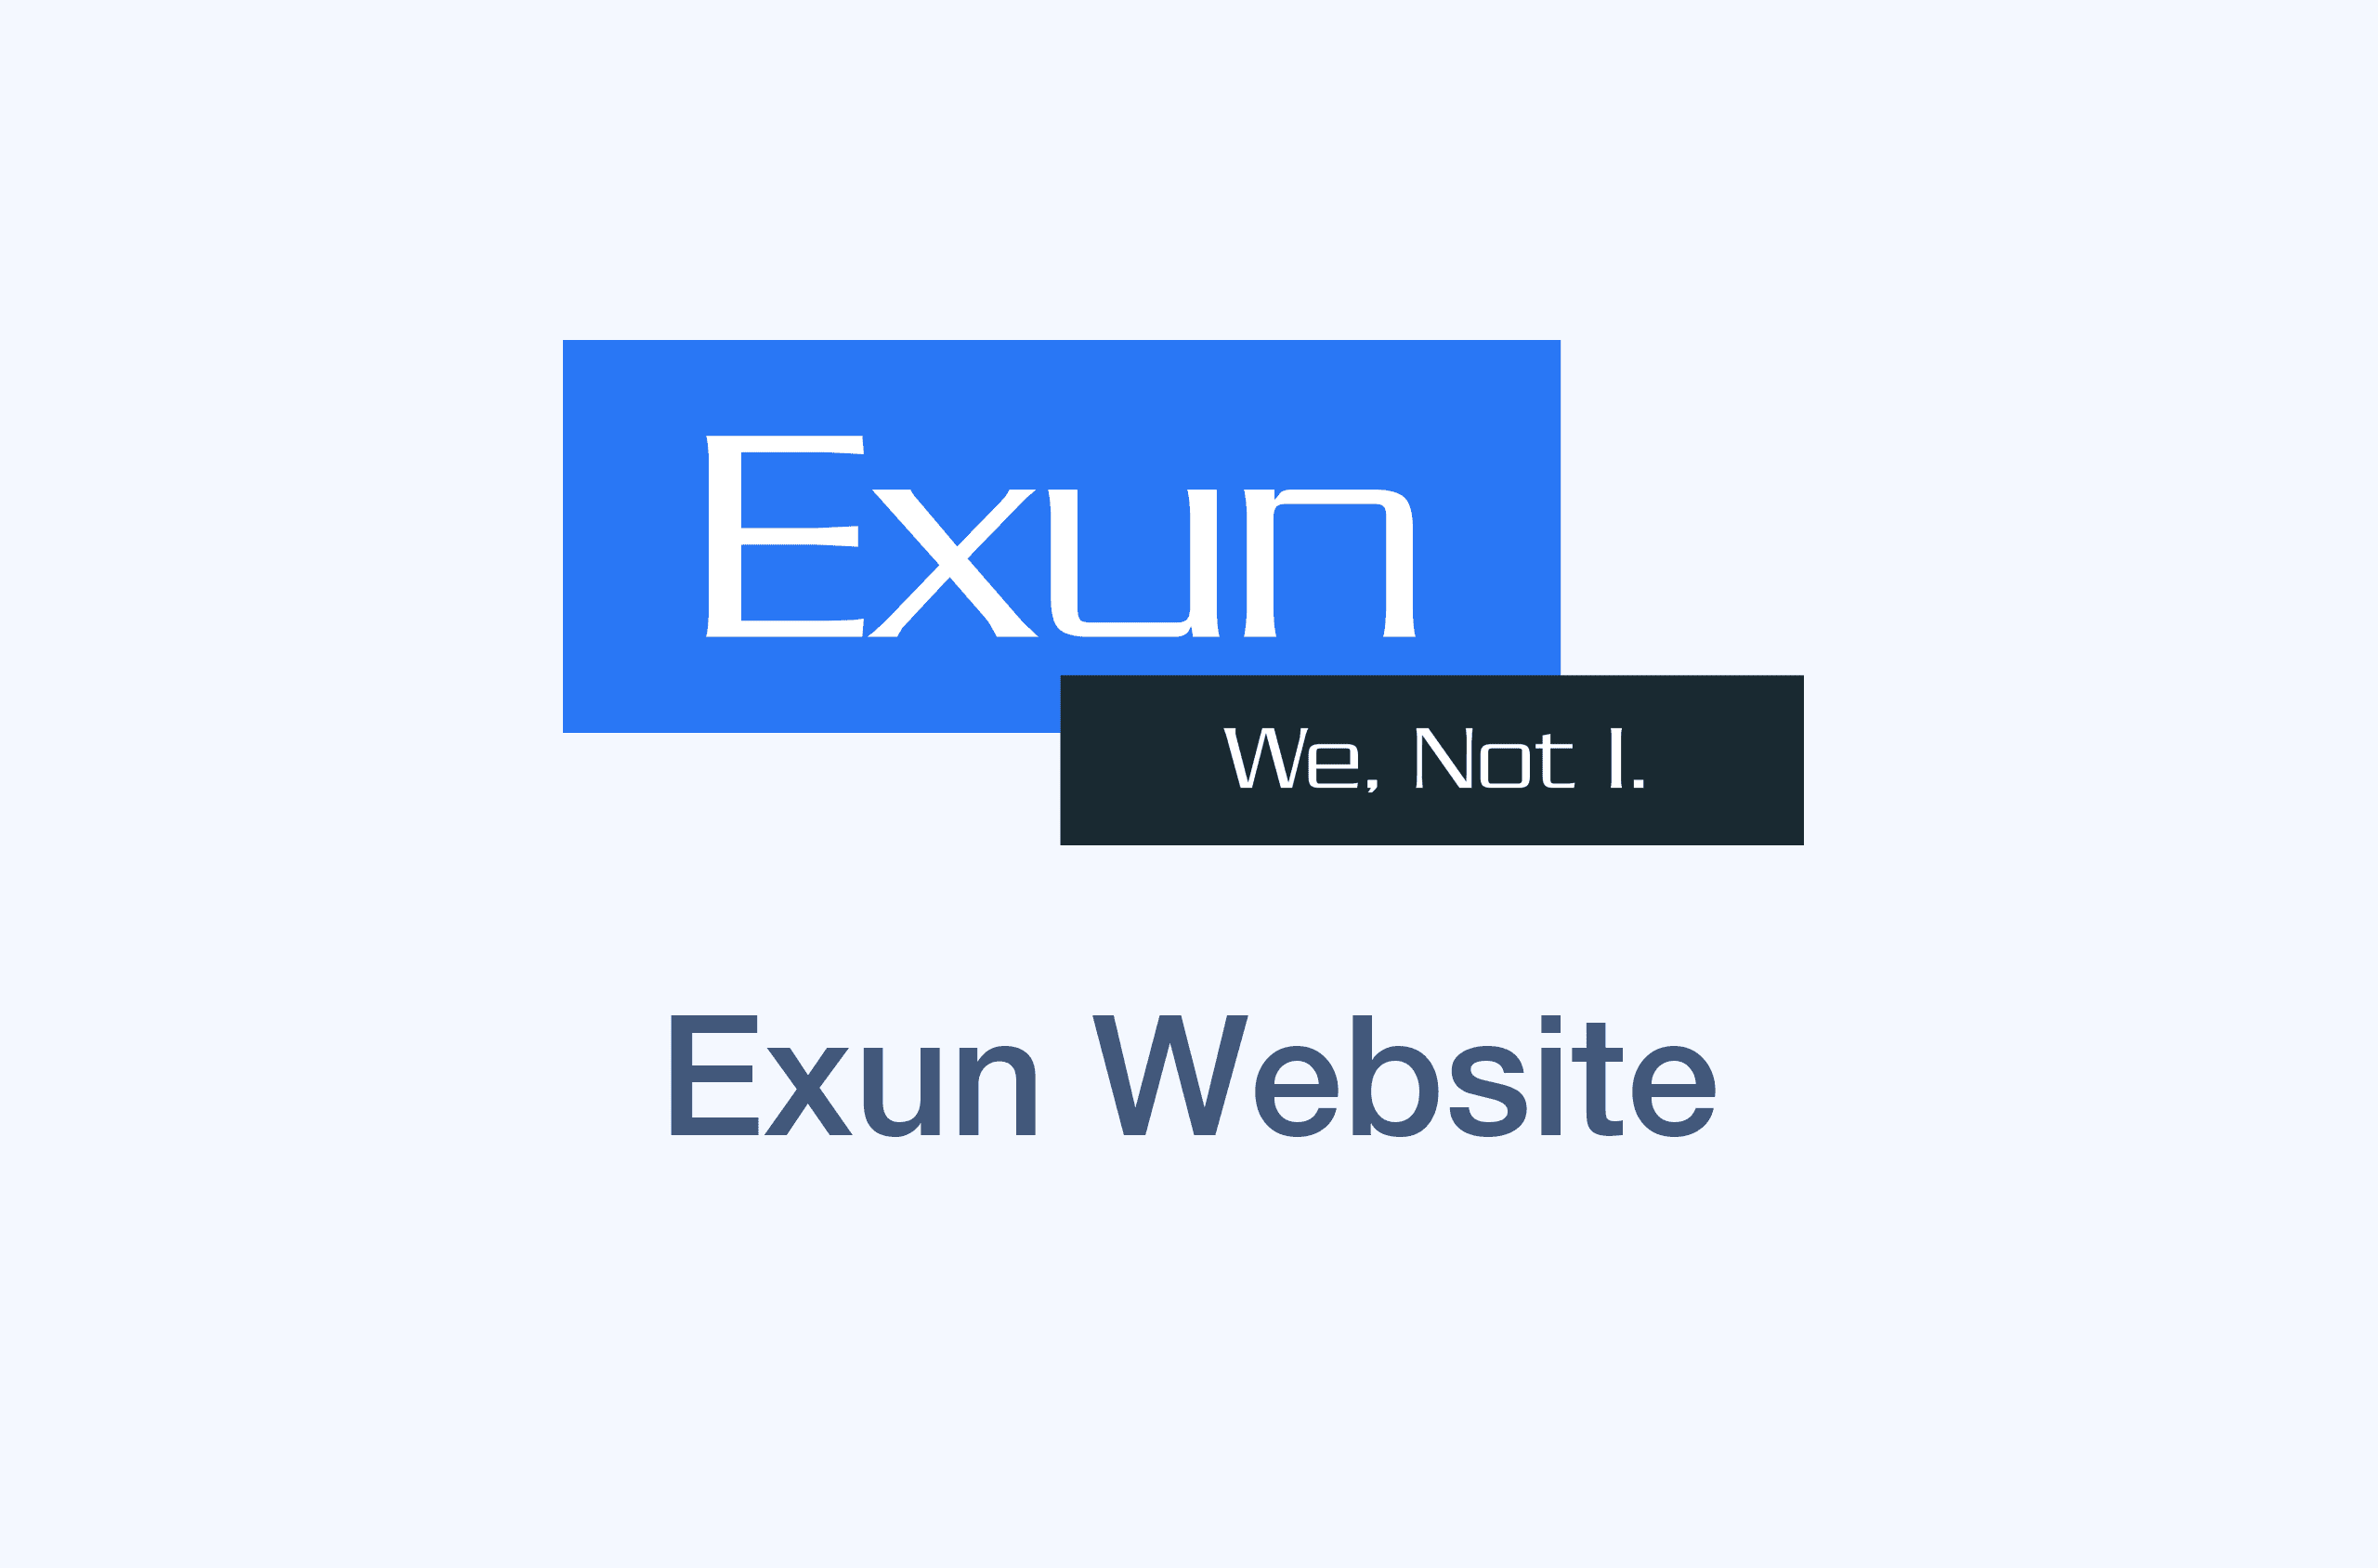 Exun Website's image